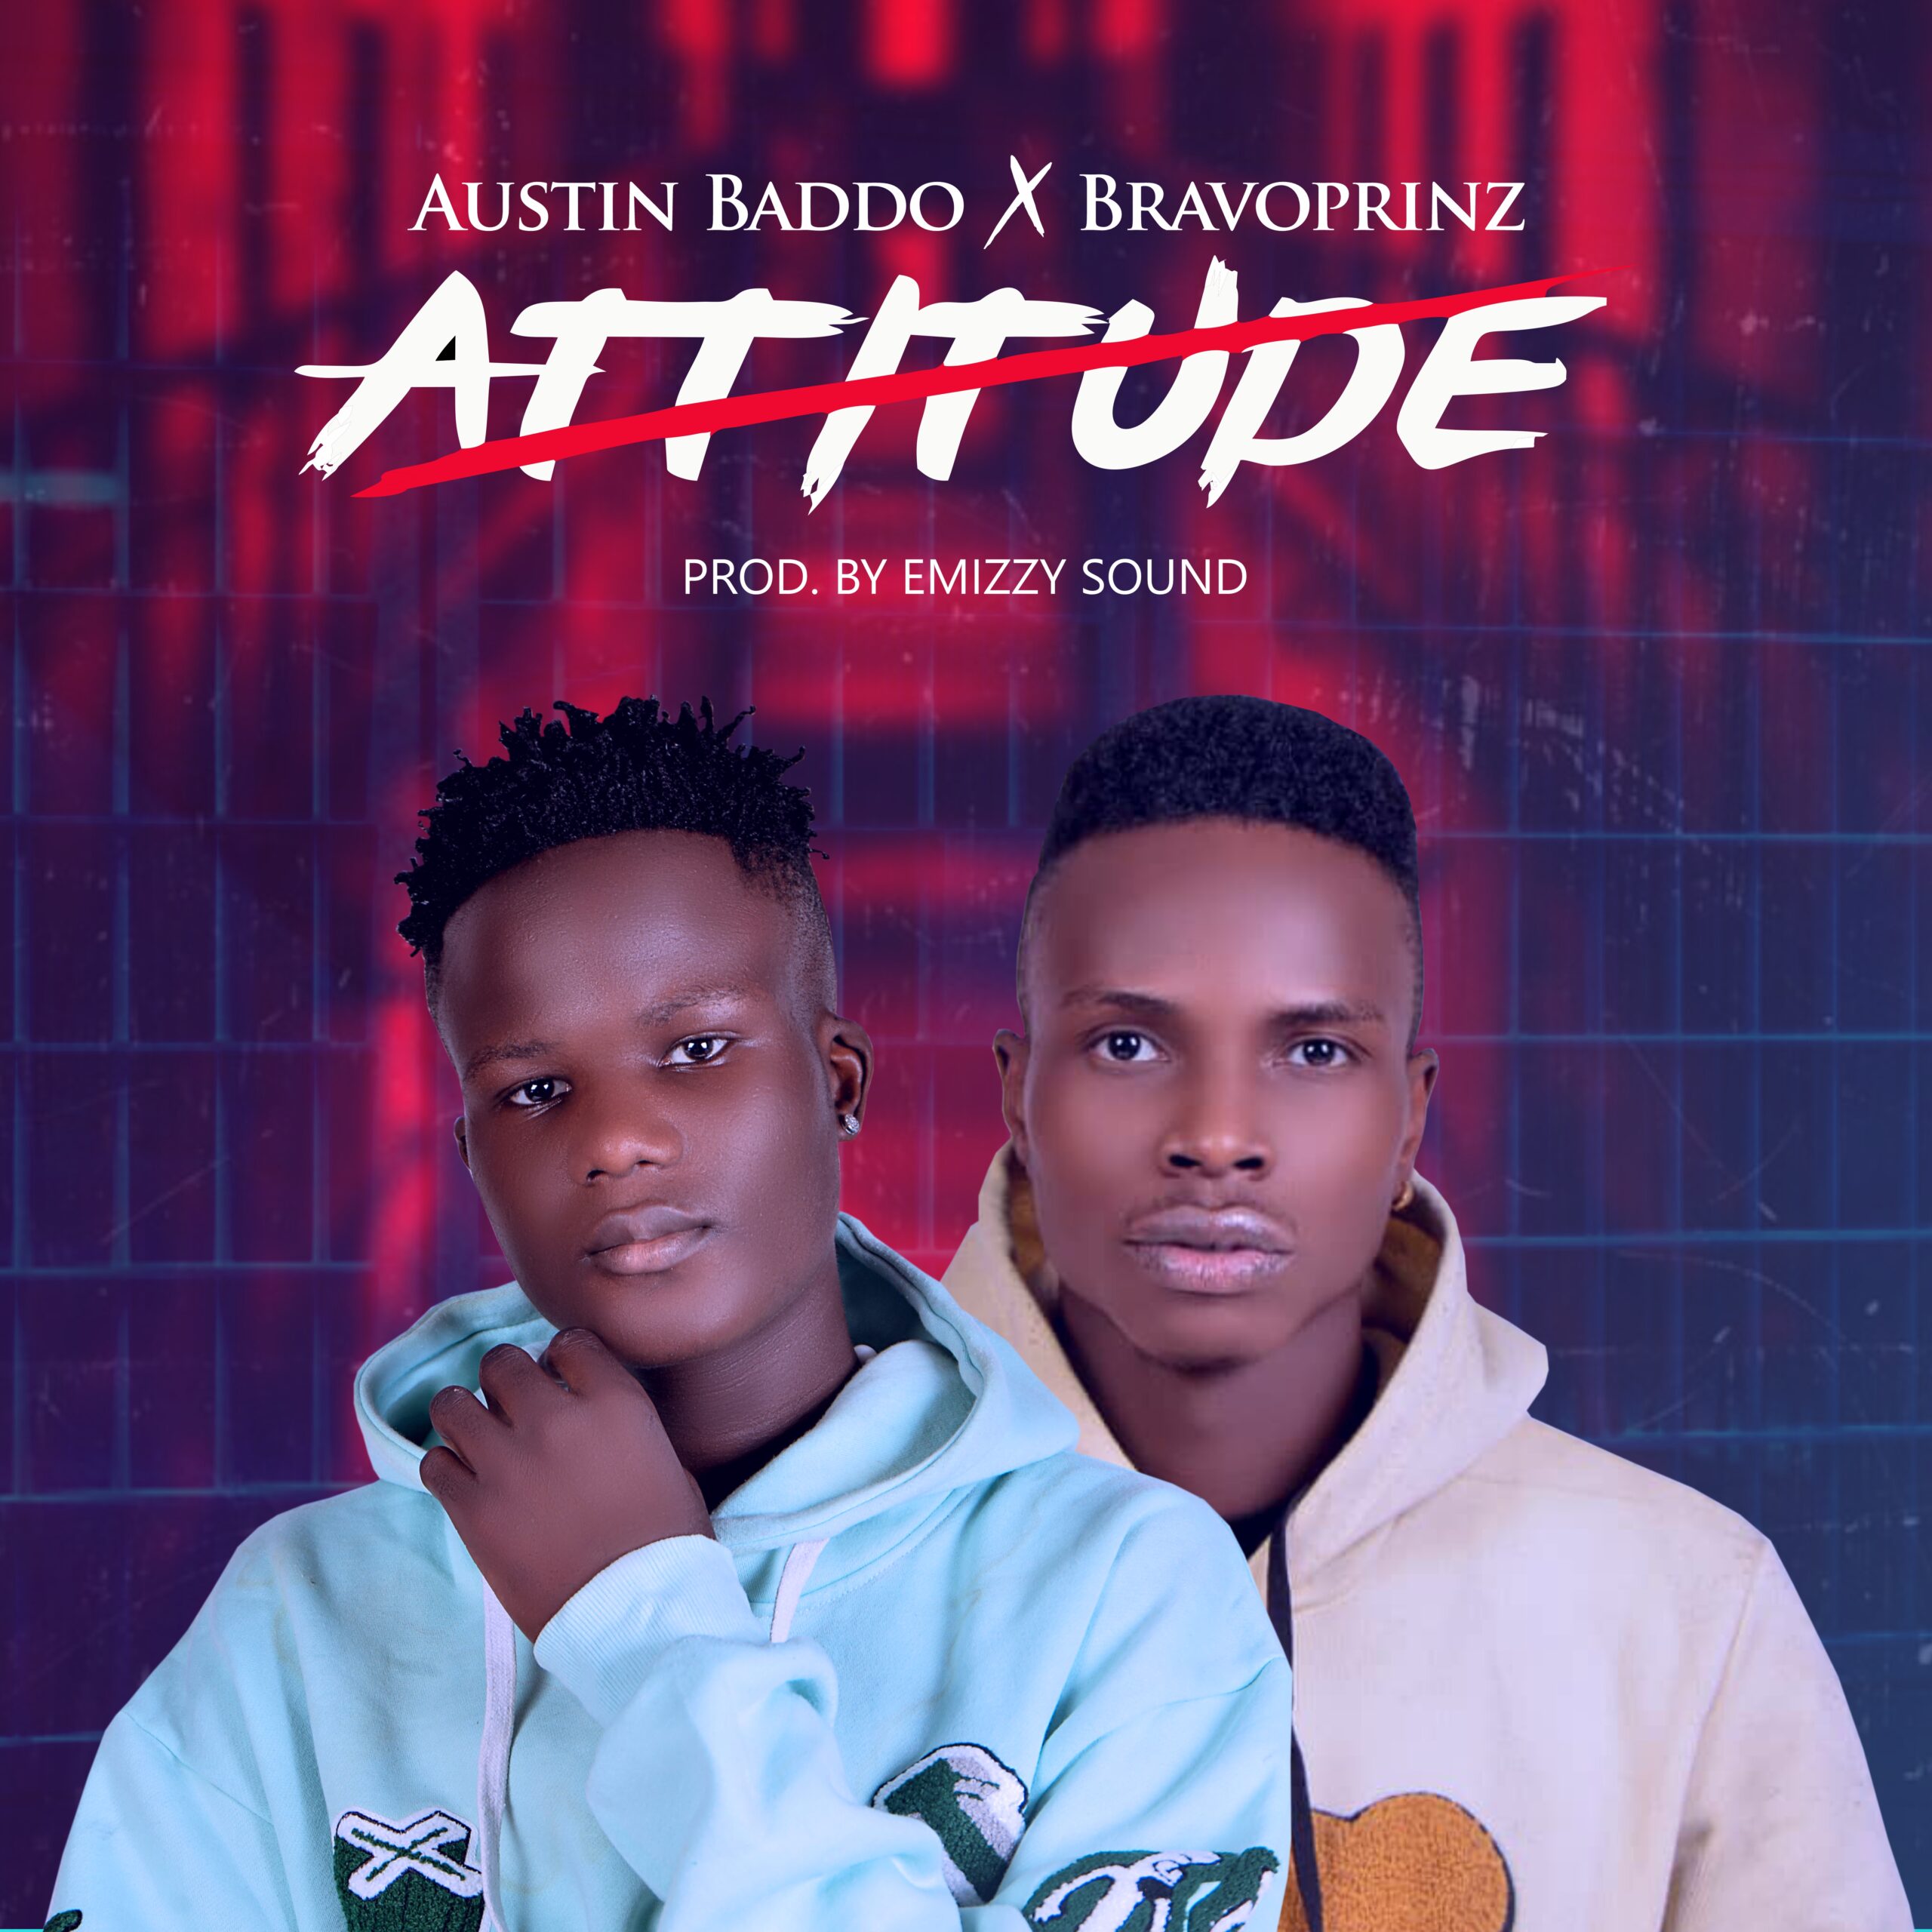 Listen & Download "ATTITUDE" by Austin Baddo Featuring Bravoprinz On Beatafrika For Free 13